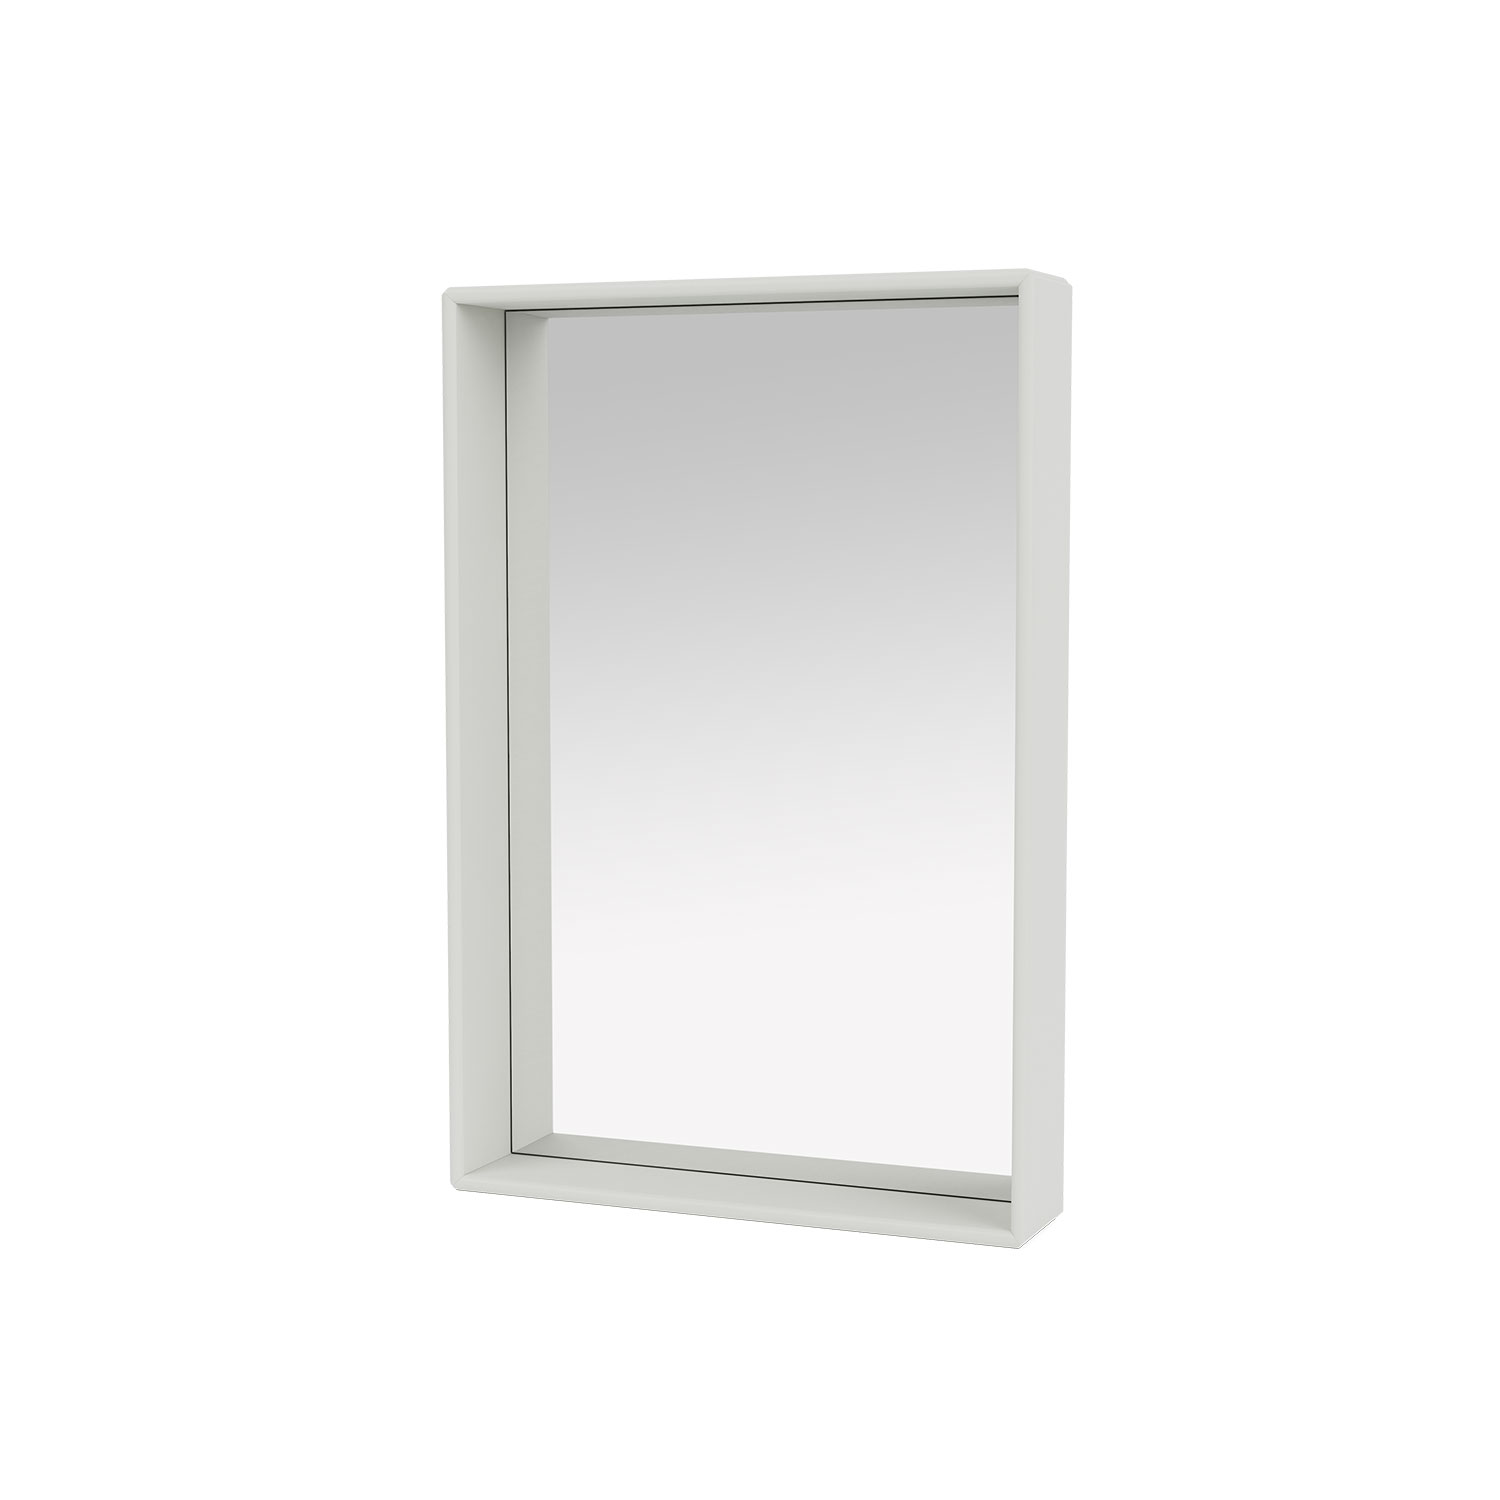 SHELFIE mirror with shelf, Nordic